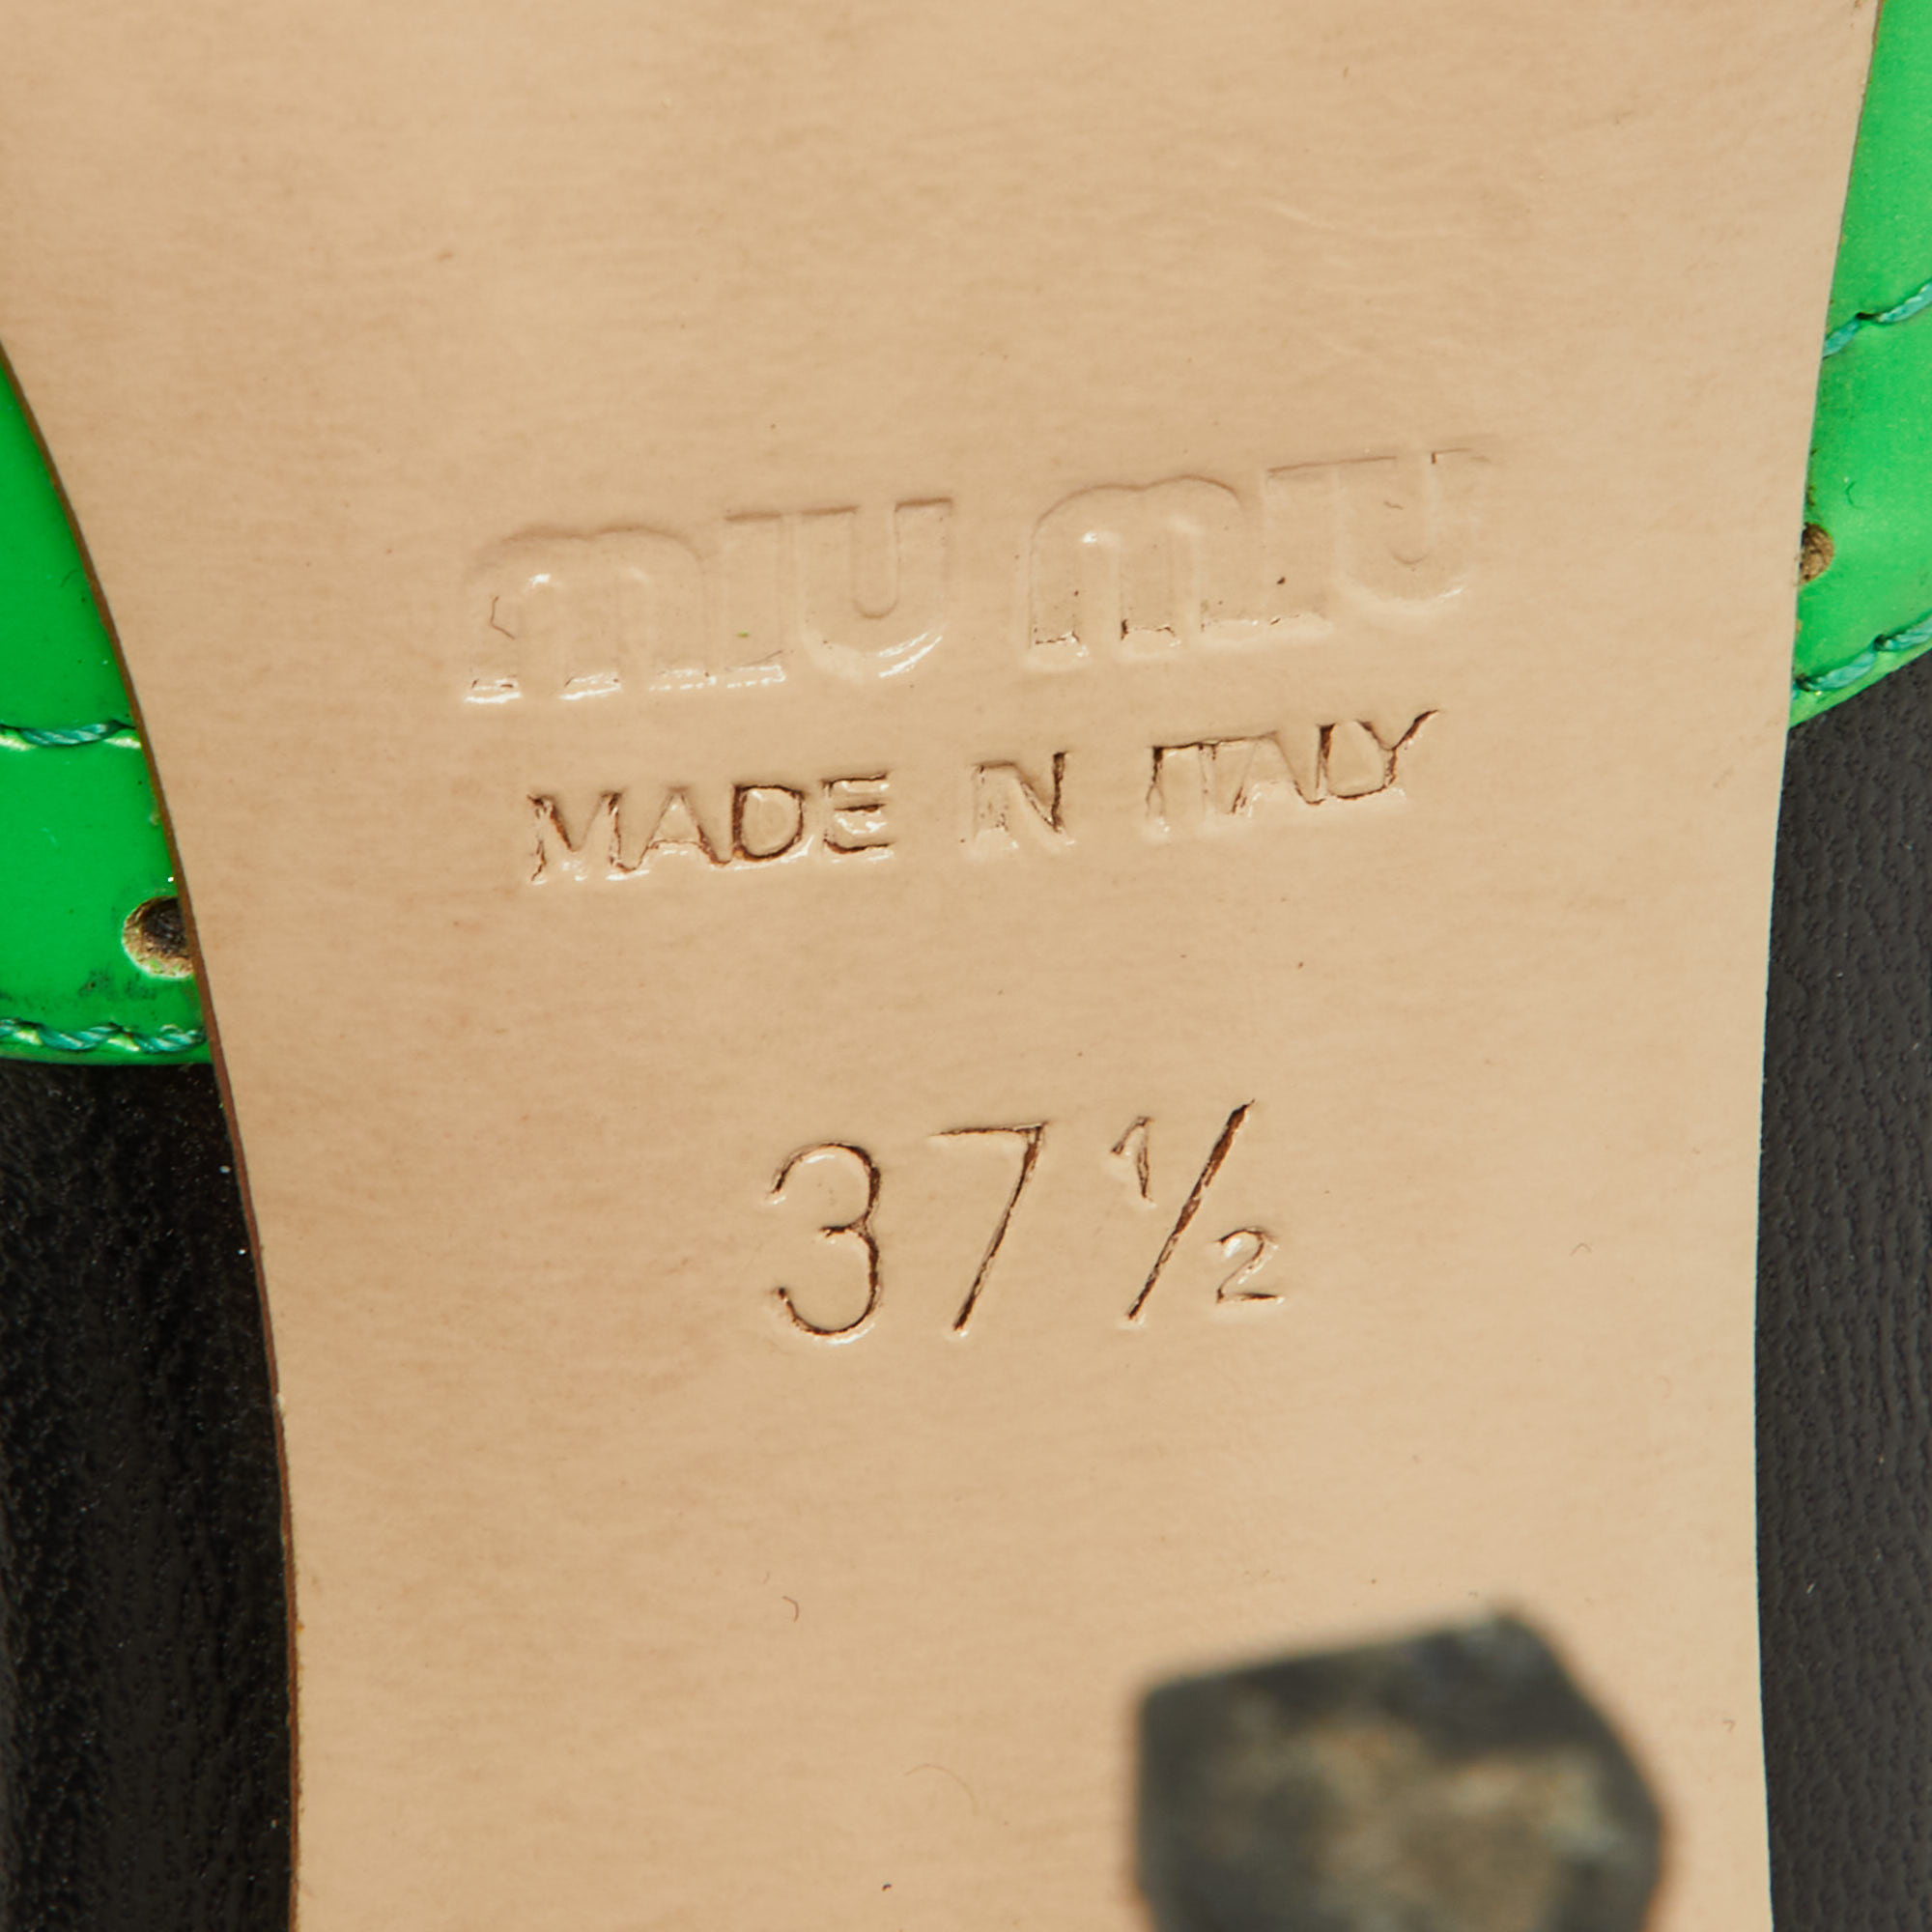 Miu Miu Green/Black Leather Slingback Peep Toe Sandals Size 37.5